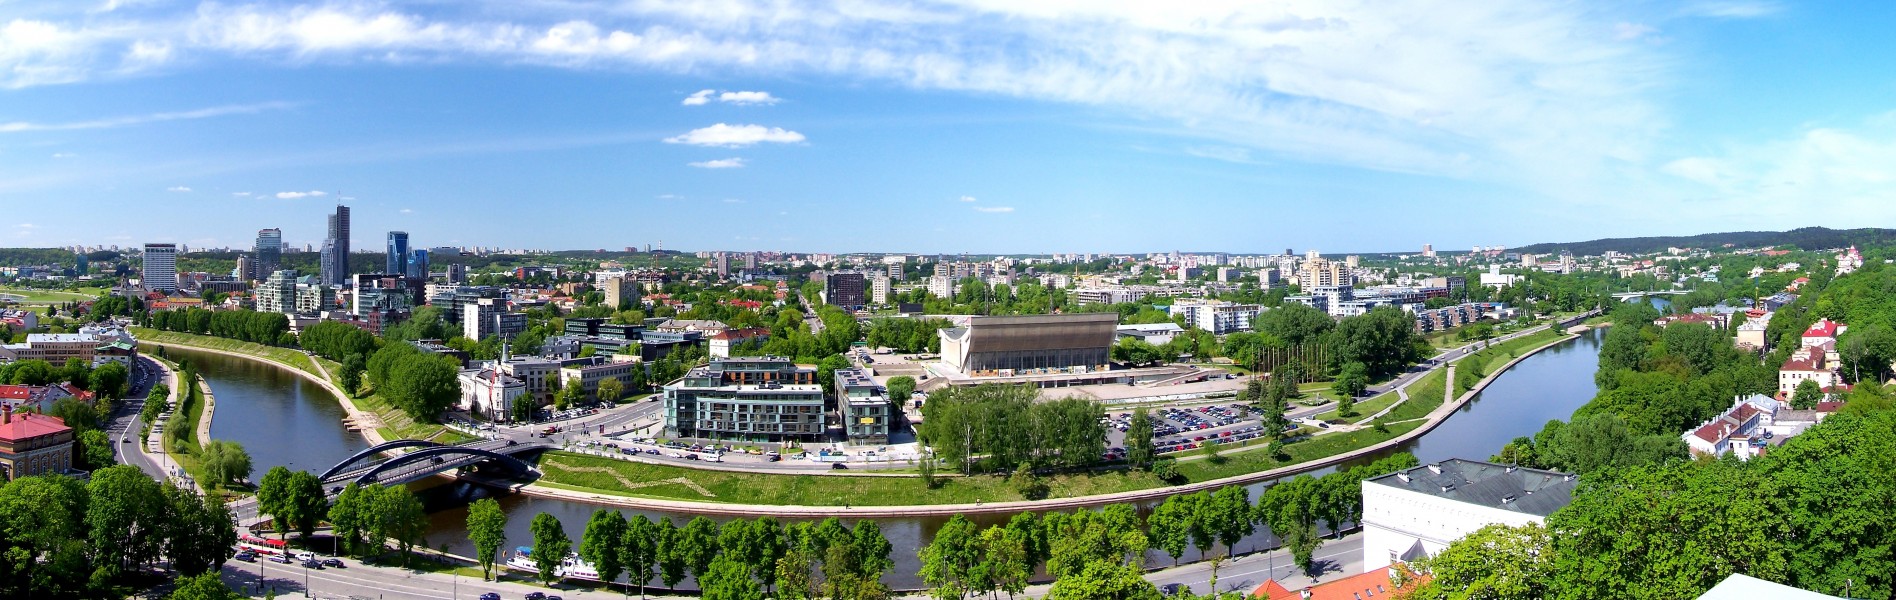 Vilnius - Panorama 01